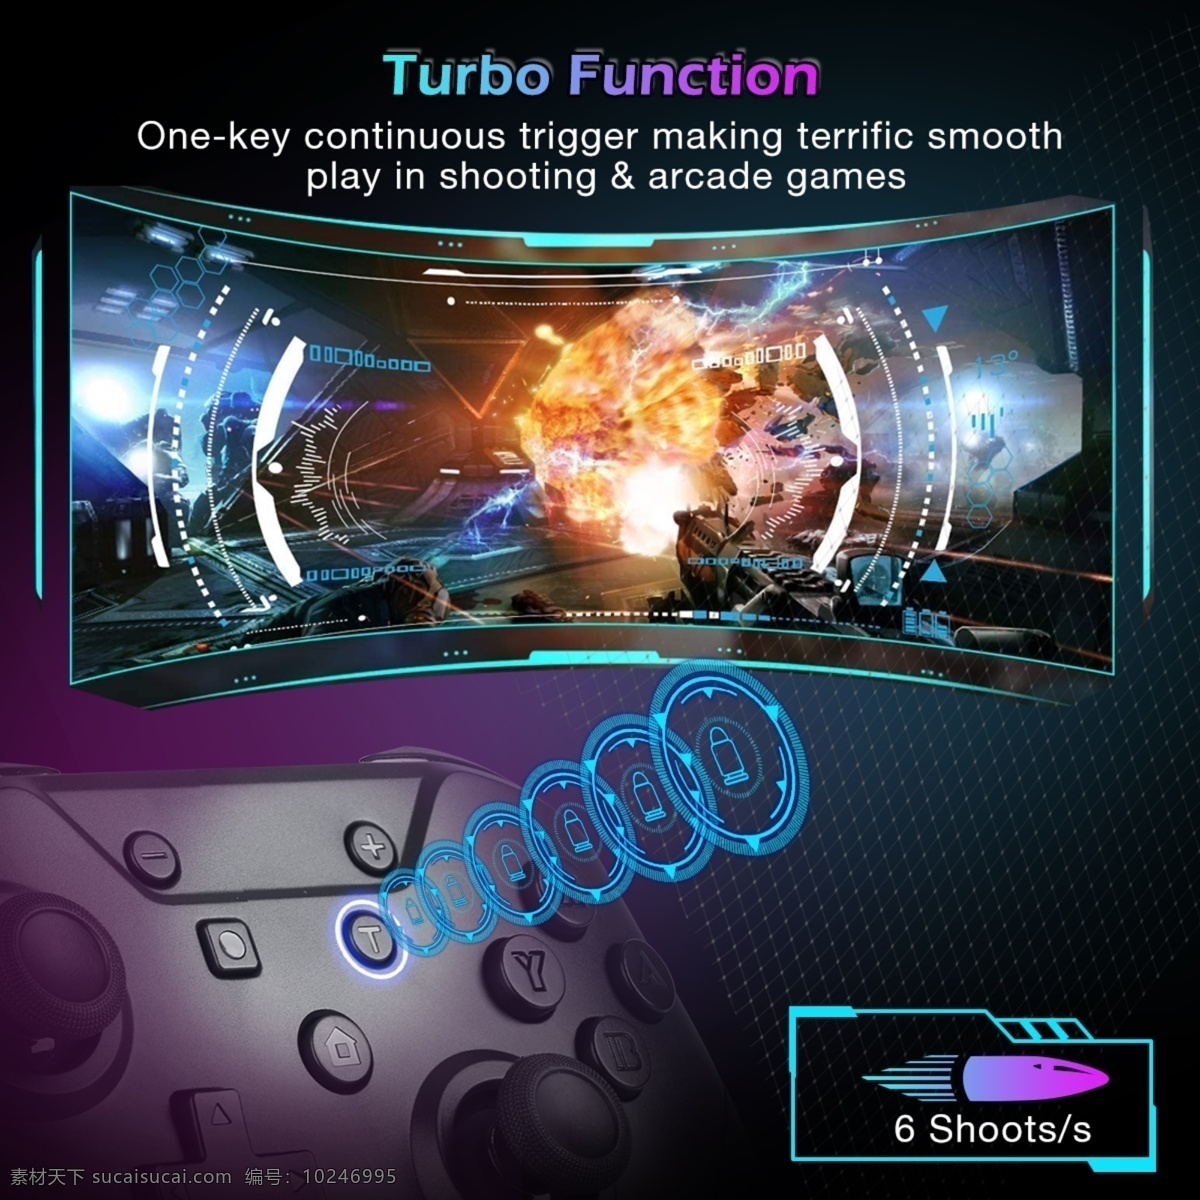 switch 游戏 手柄 turbo 游戏手柄 turbo图 连续发射 精修图 亚马逊主图 游戏图 image